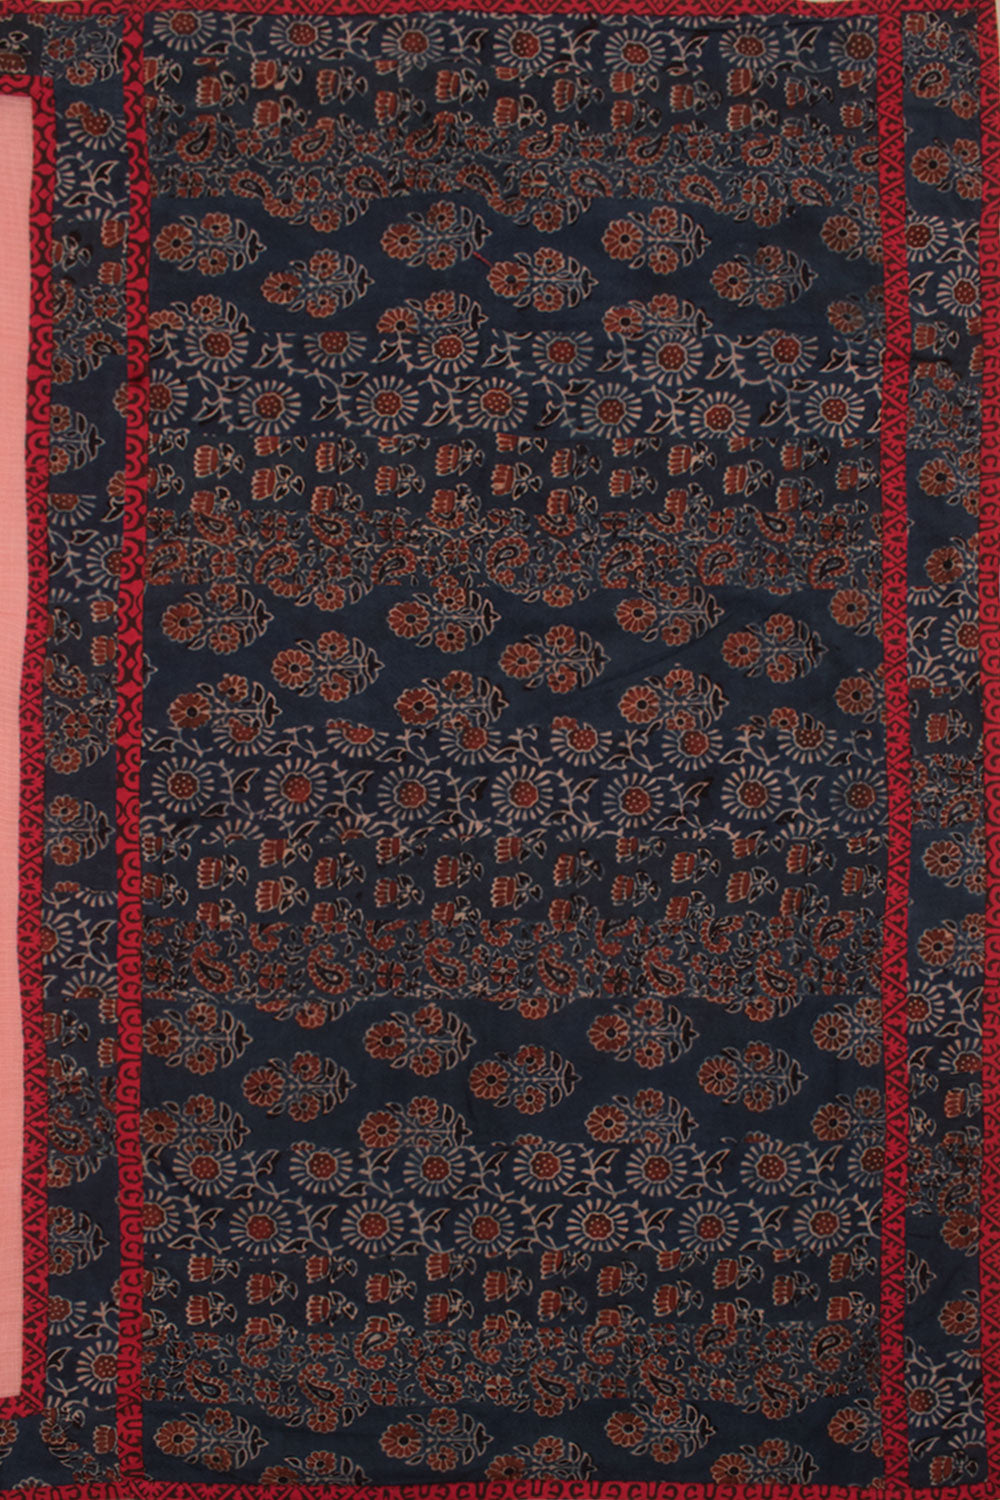 Ajrakh Printed Kota Doria Cotton Saree 10059086